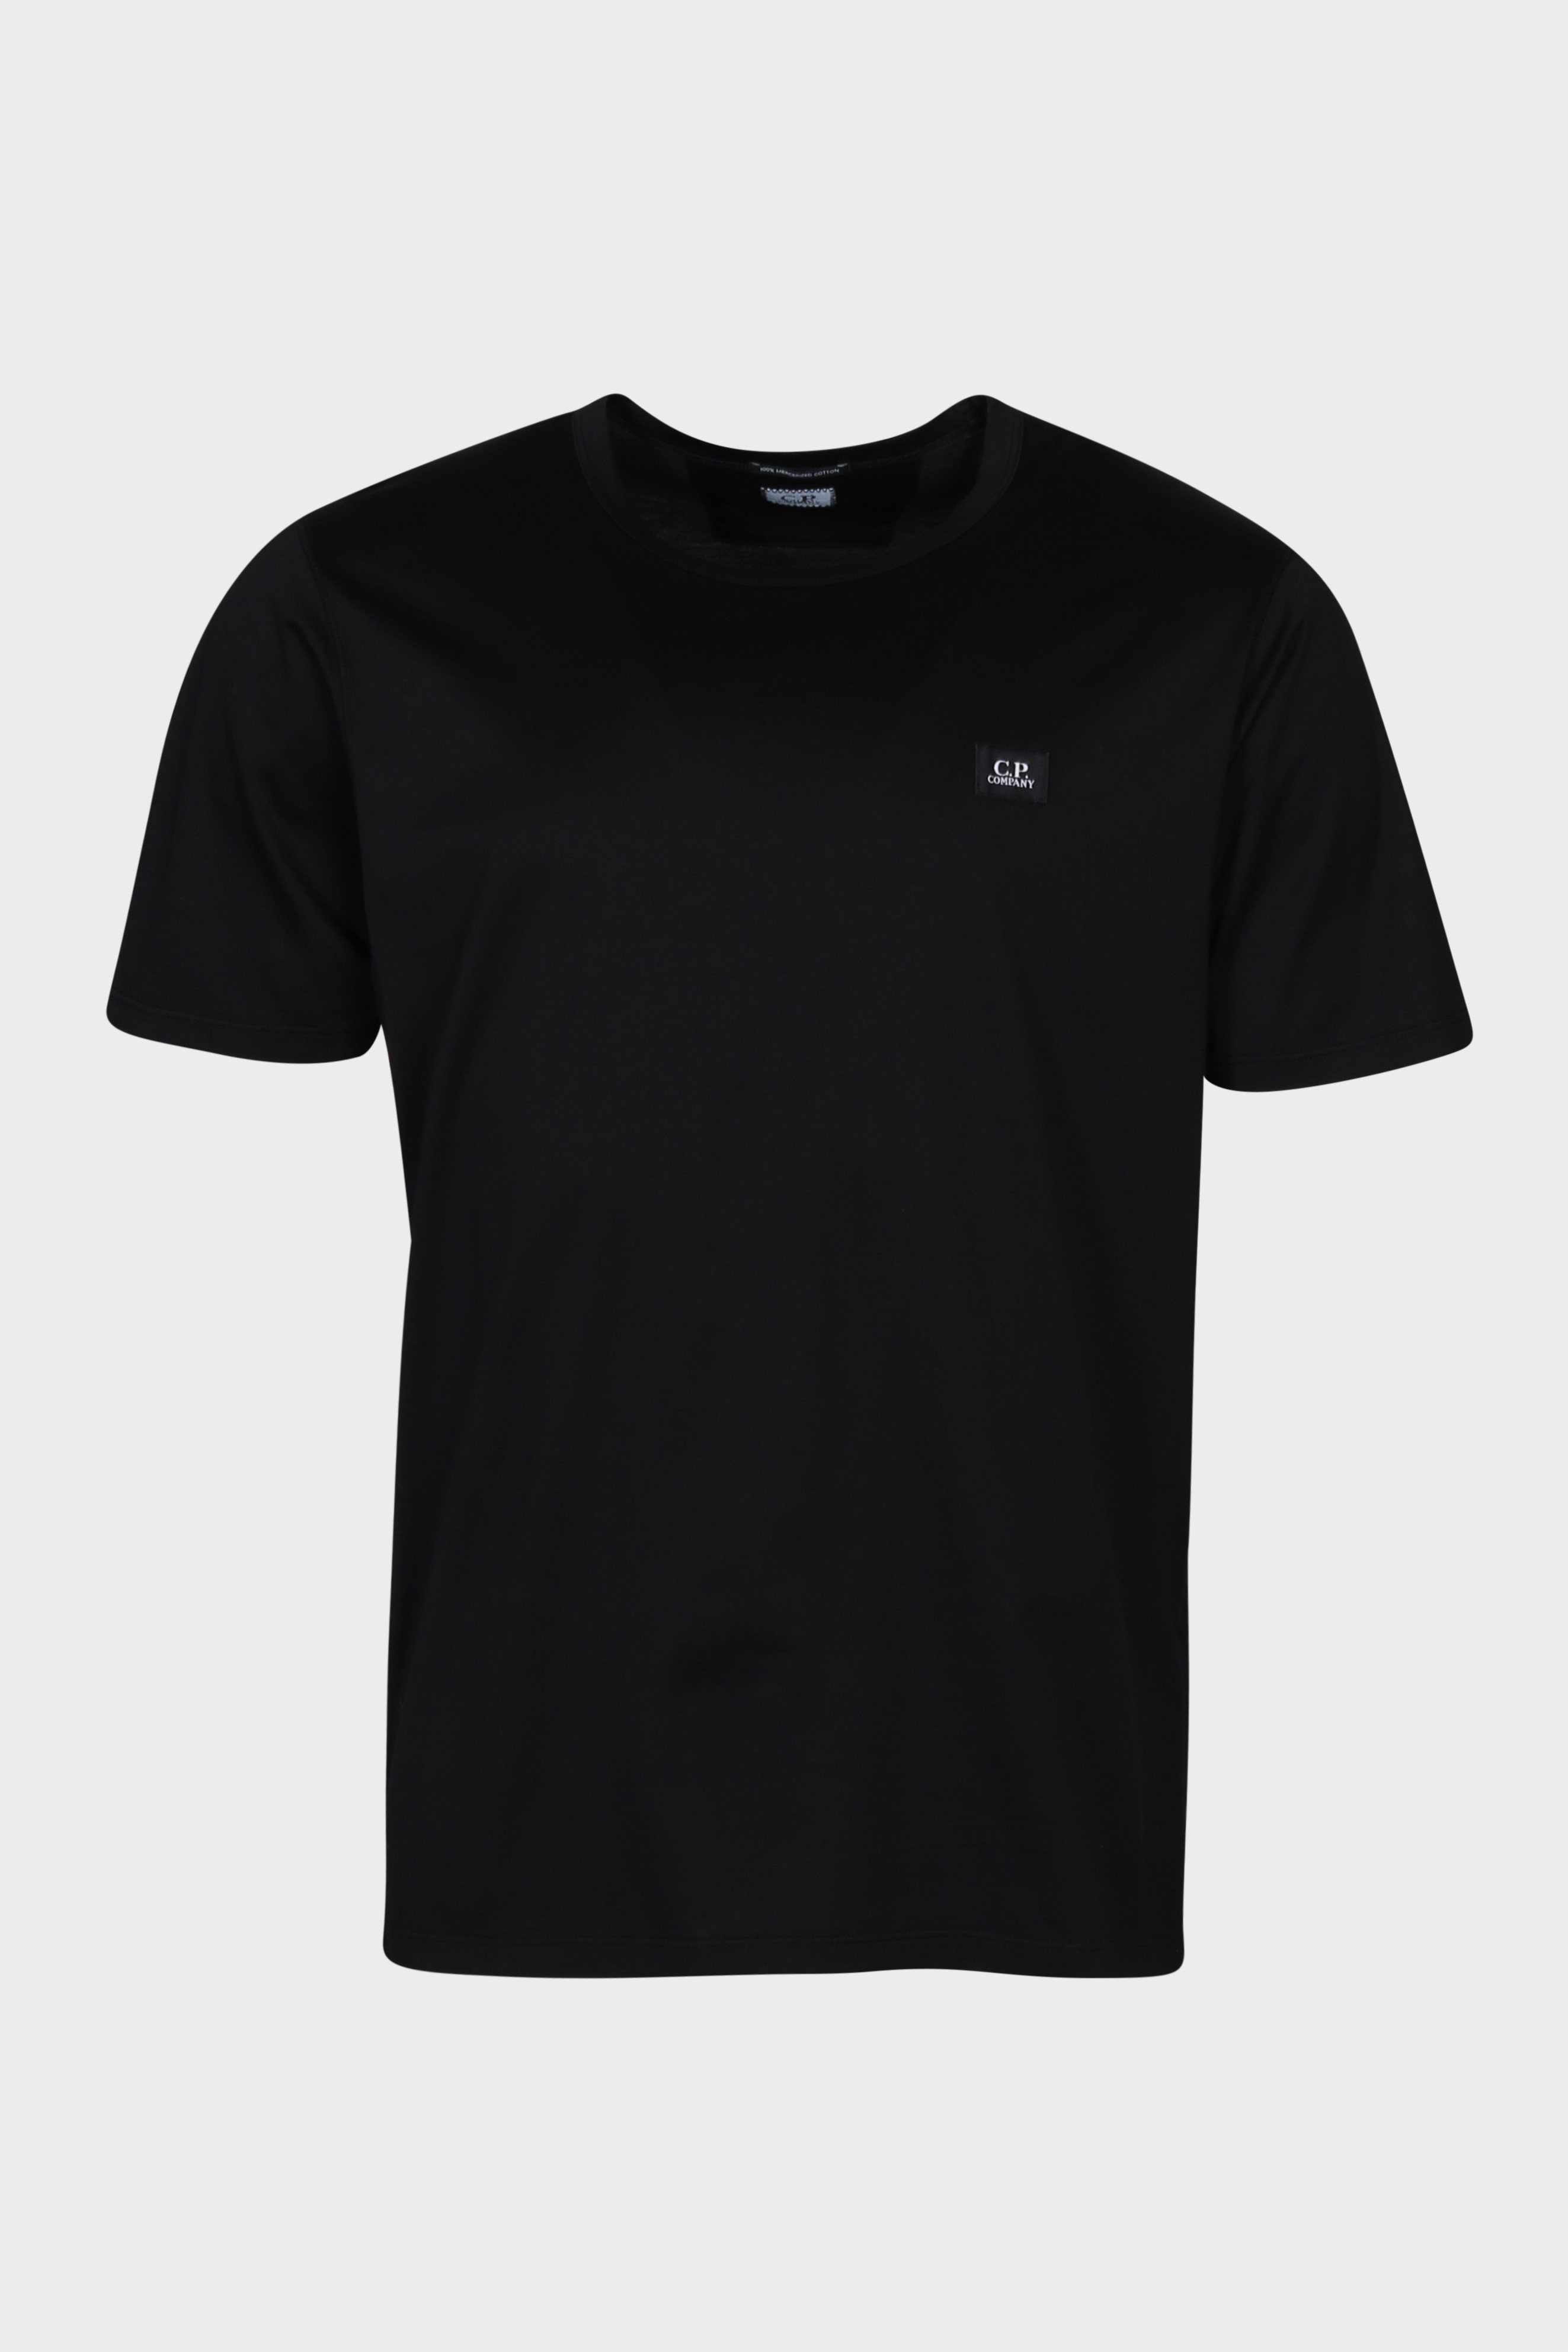 C.P. COMPANY T-Shirt in Black XXXL